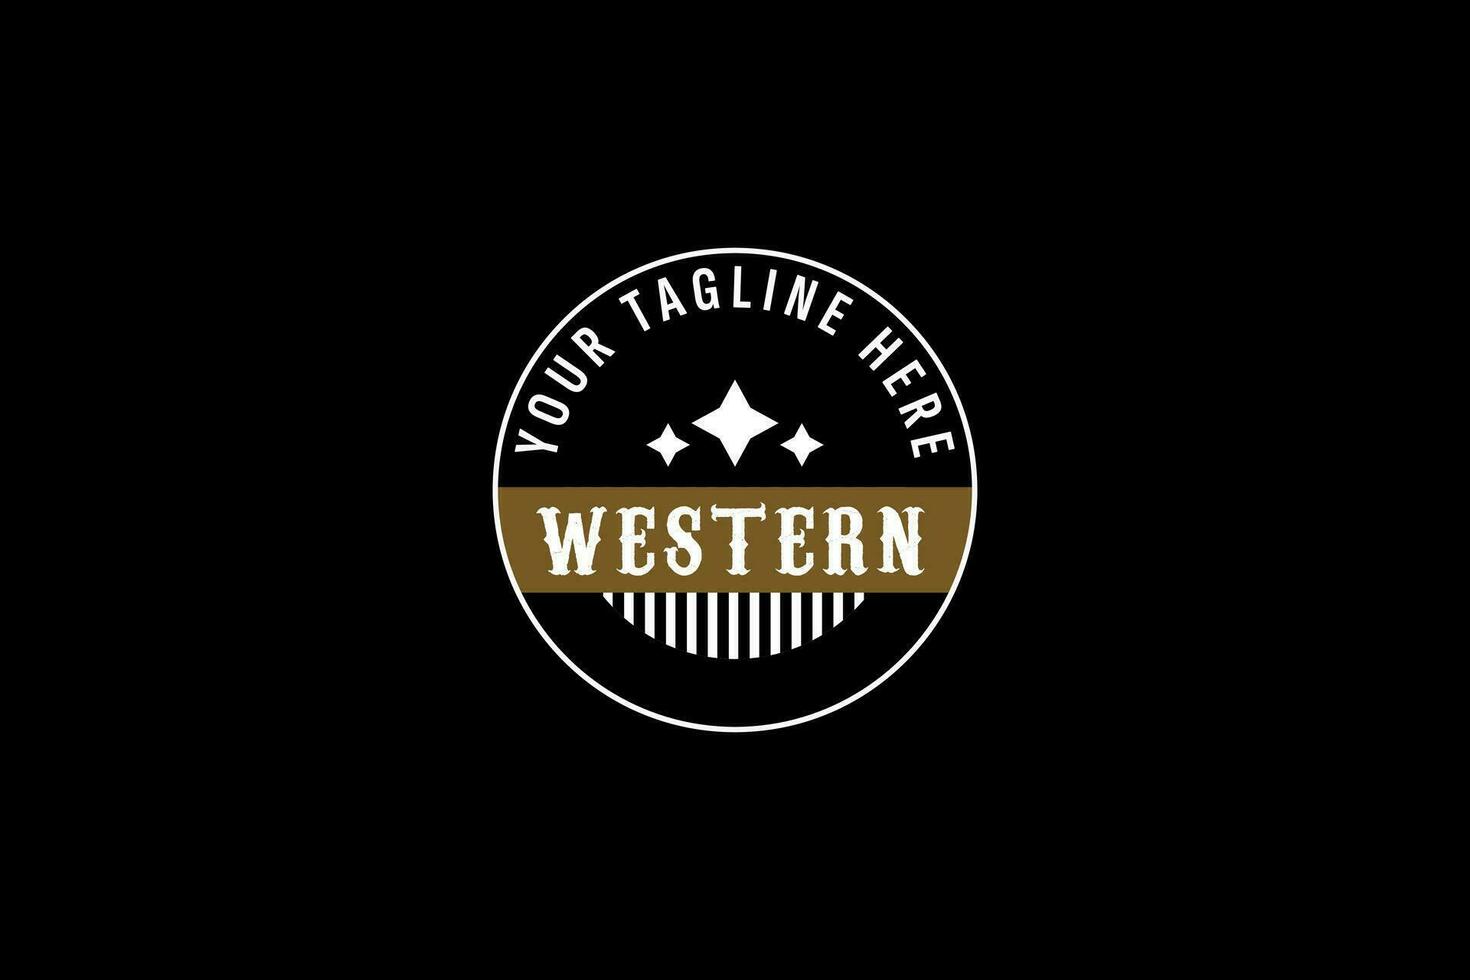 Vintage Country Emblem Typografie für Western Bar Restaurant Logo Design Inspiration vektor